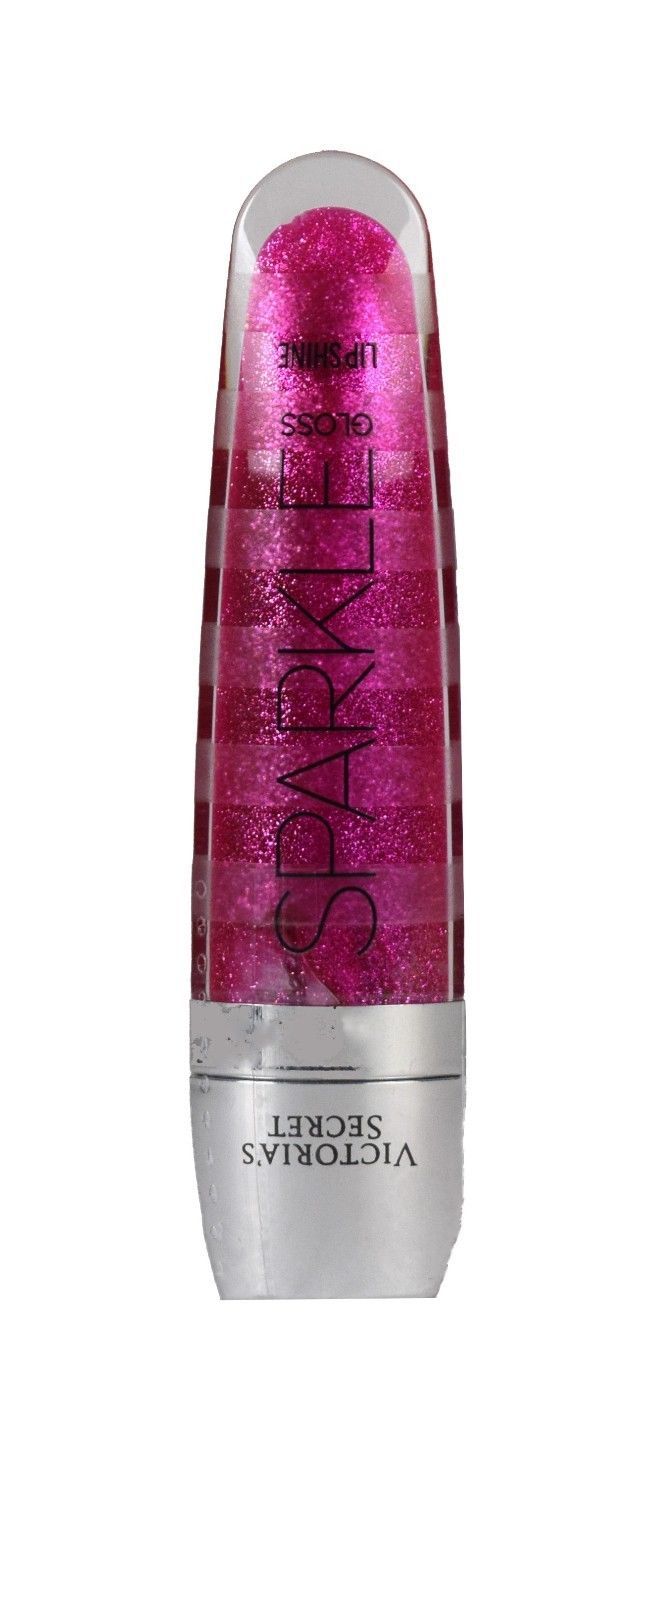 Victoria's Secret Beauty Rush Sparkle Gloss Lip Shine in Sequined - $8.50